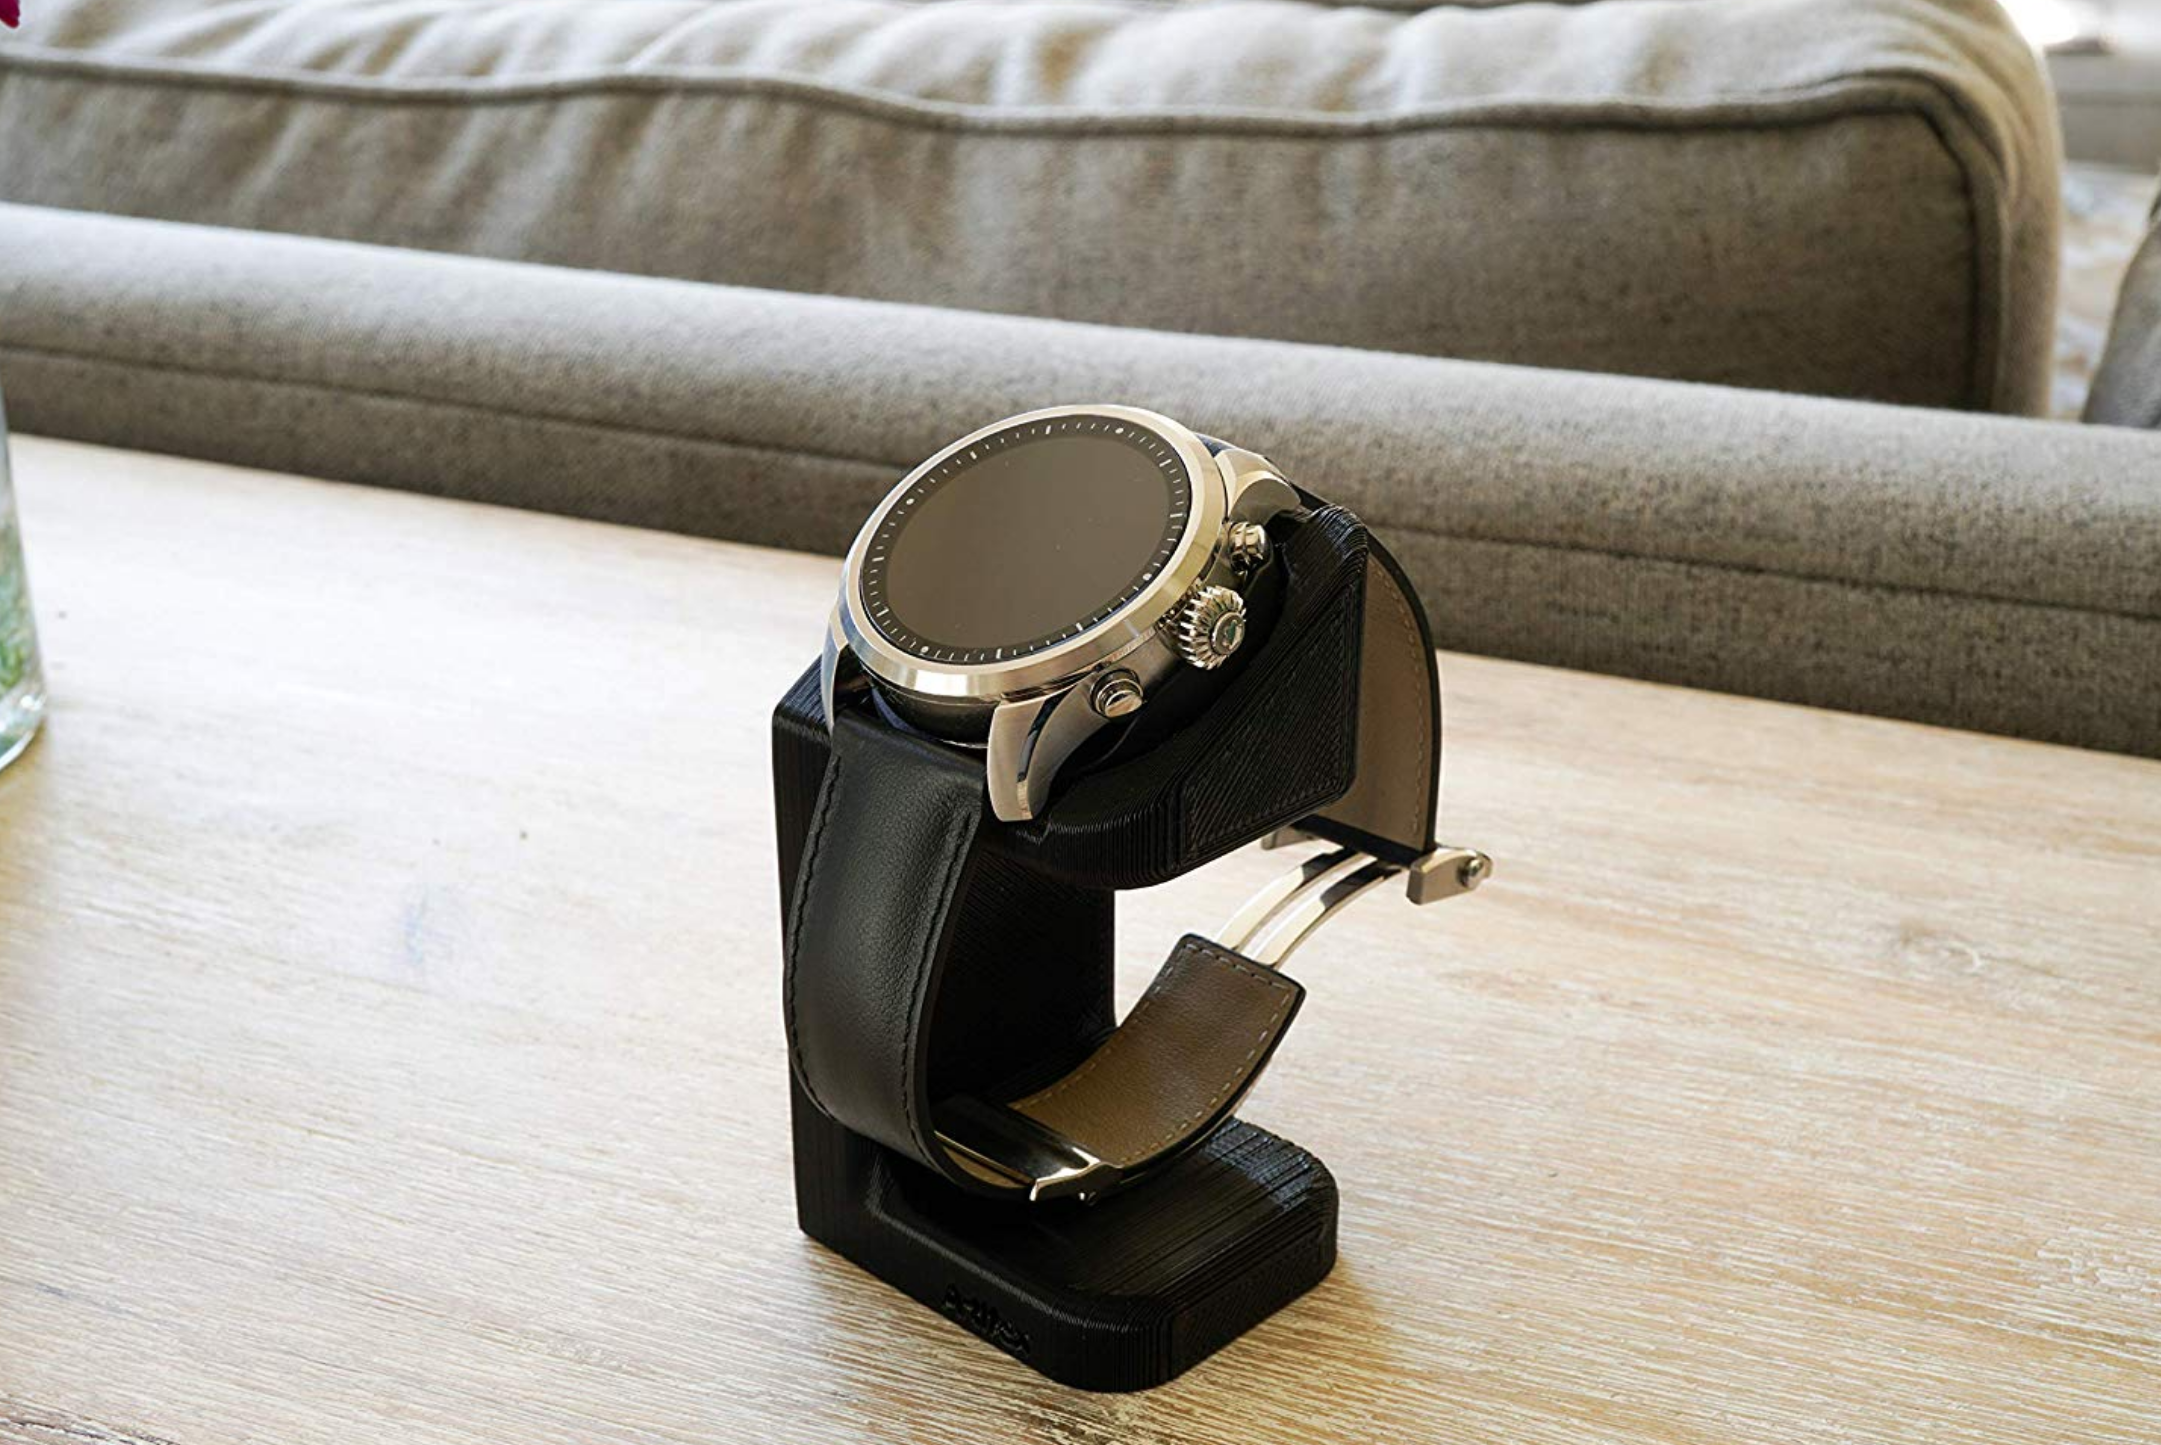 Artifex Design Stand Configured for MontBlanc Summit 2 Smartwatch, Charging Stand - Artifex Design 3D